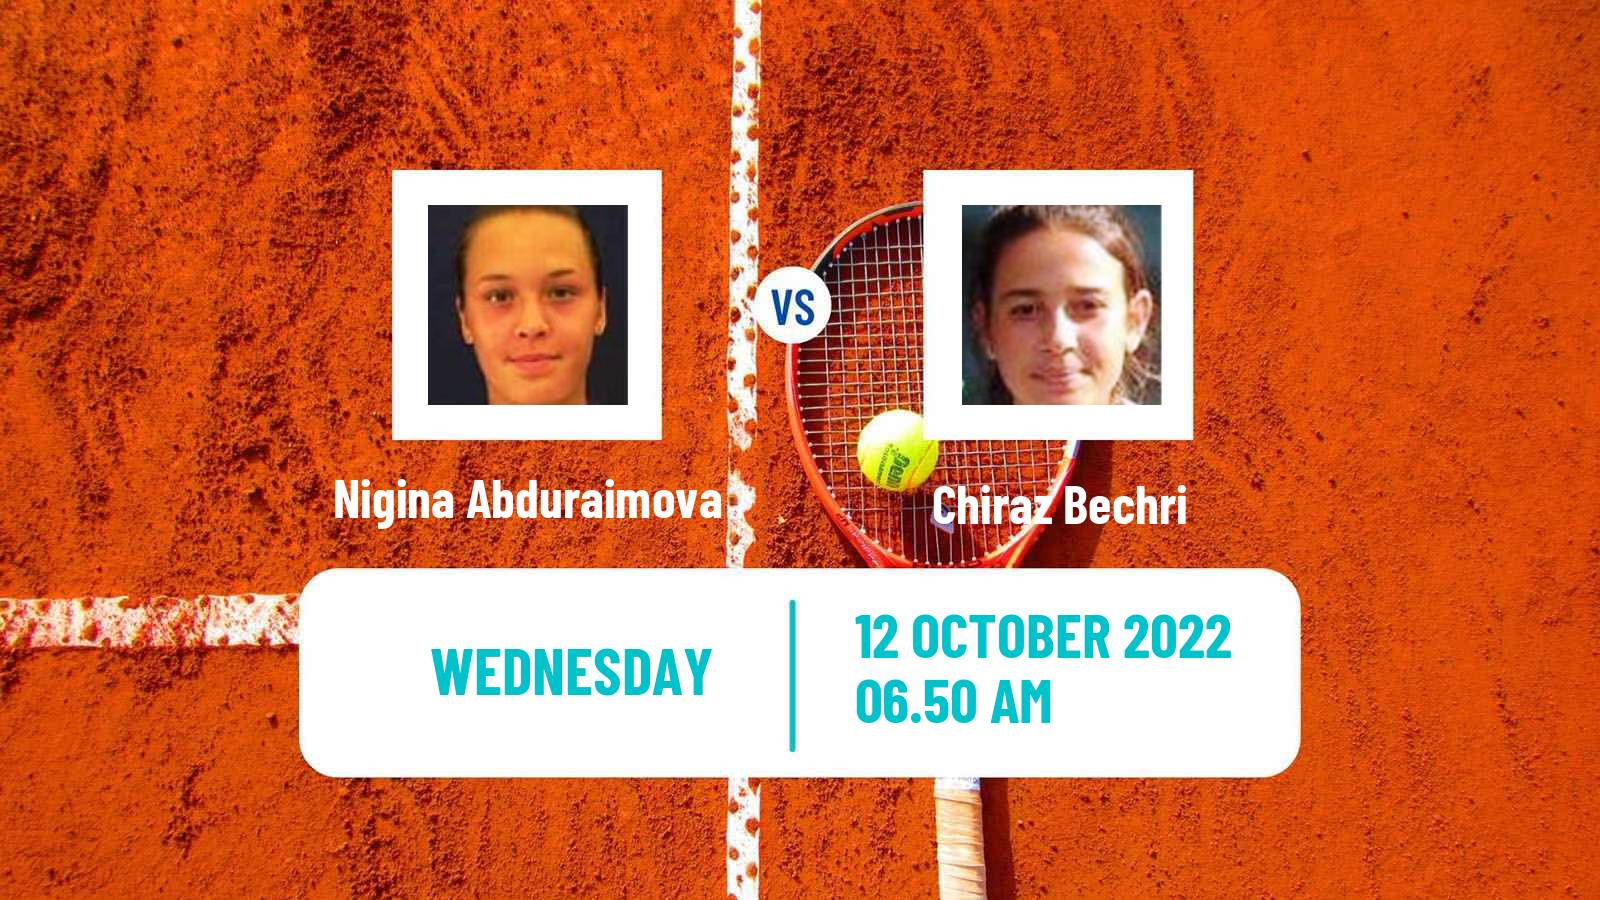 Tennis ITF Tournaments Nigina Abduraimova - Chiraz Bechri